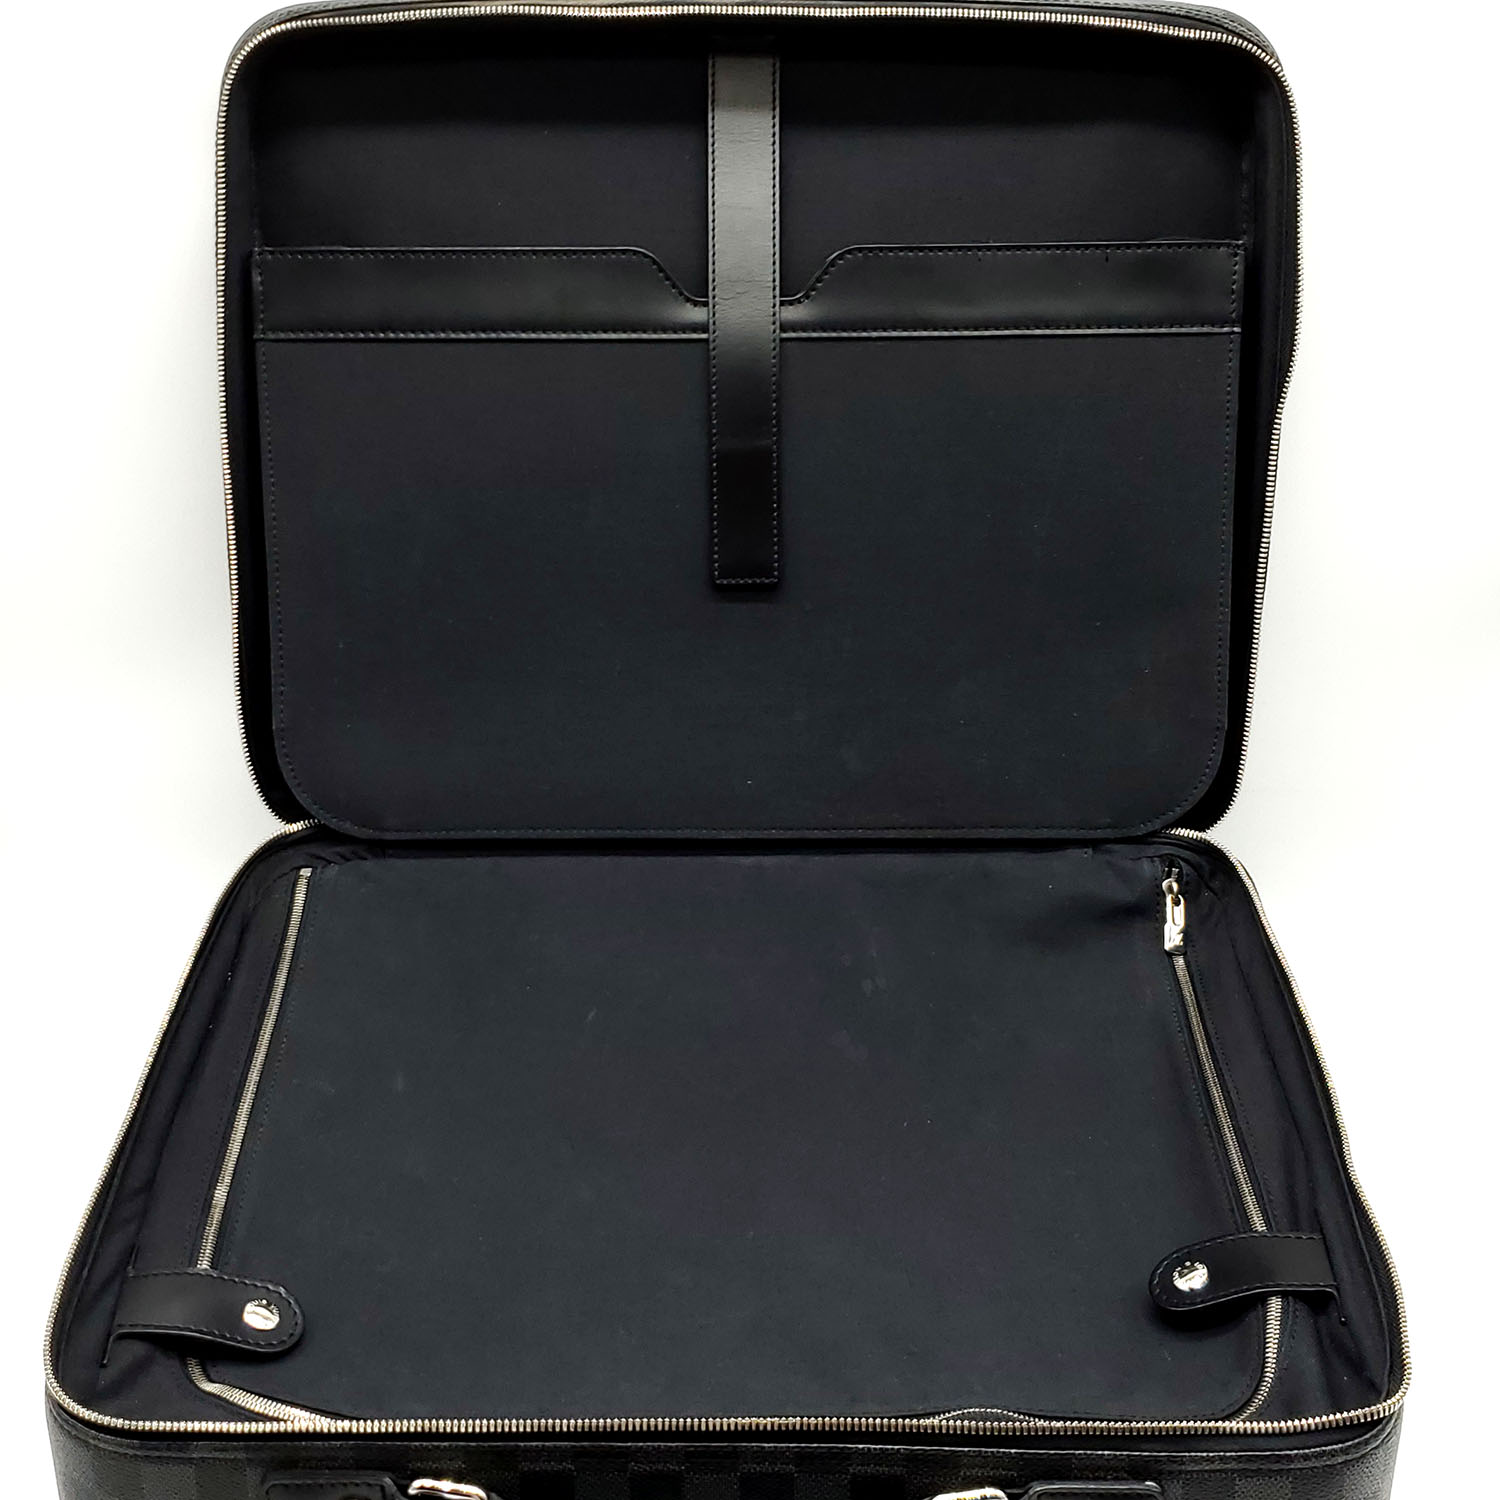 Pilot case leather travel bag Louis Vuitton Black in Leather - 32789067